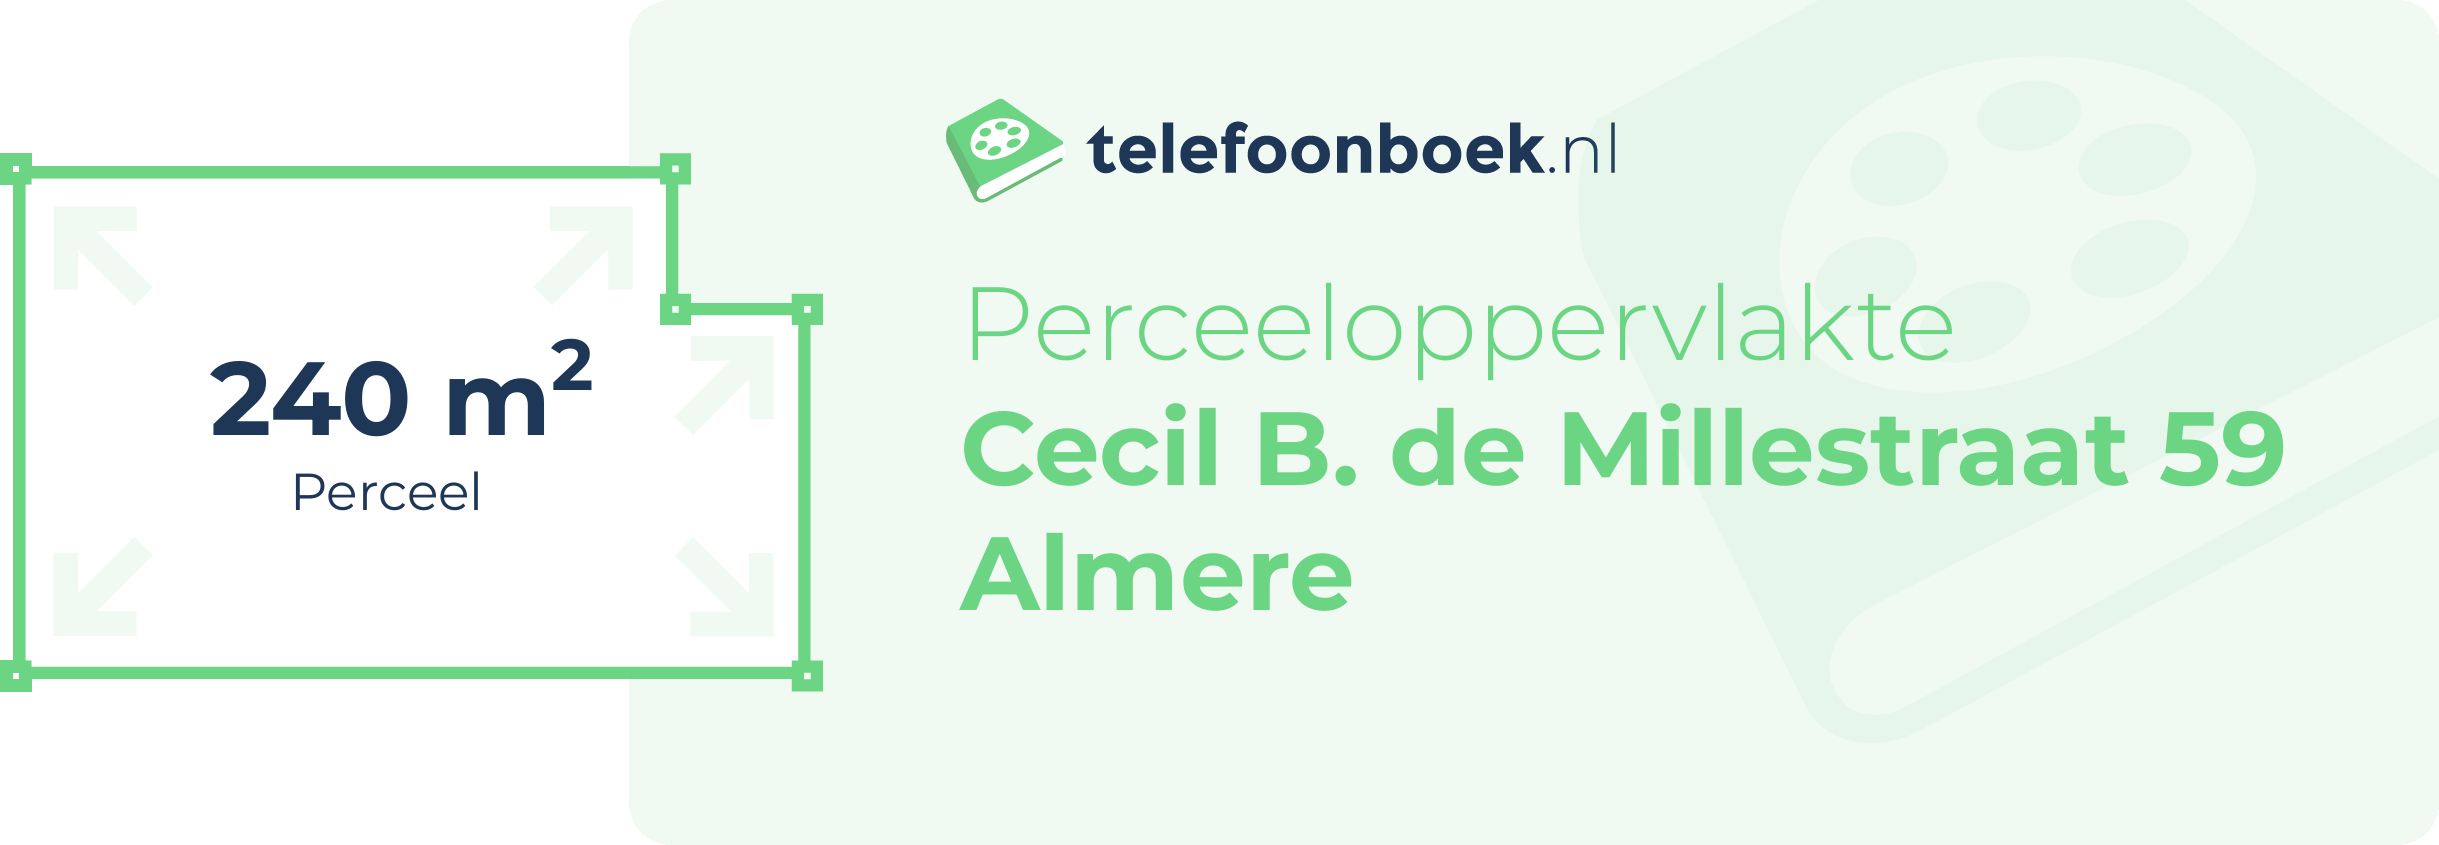 Perceeloppervlakte Cecil B. De Millestraat 59 Almere